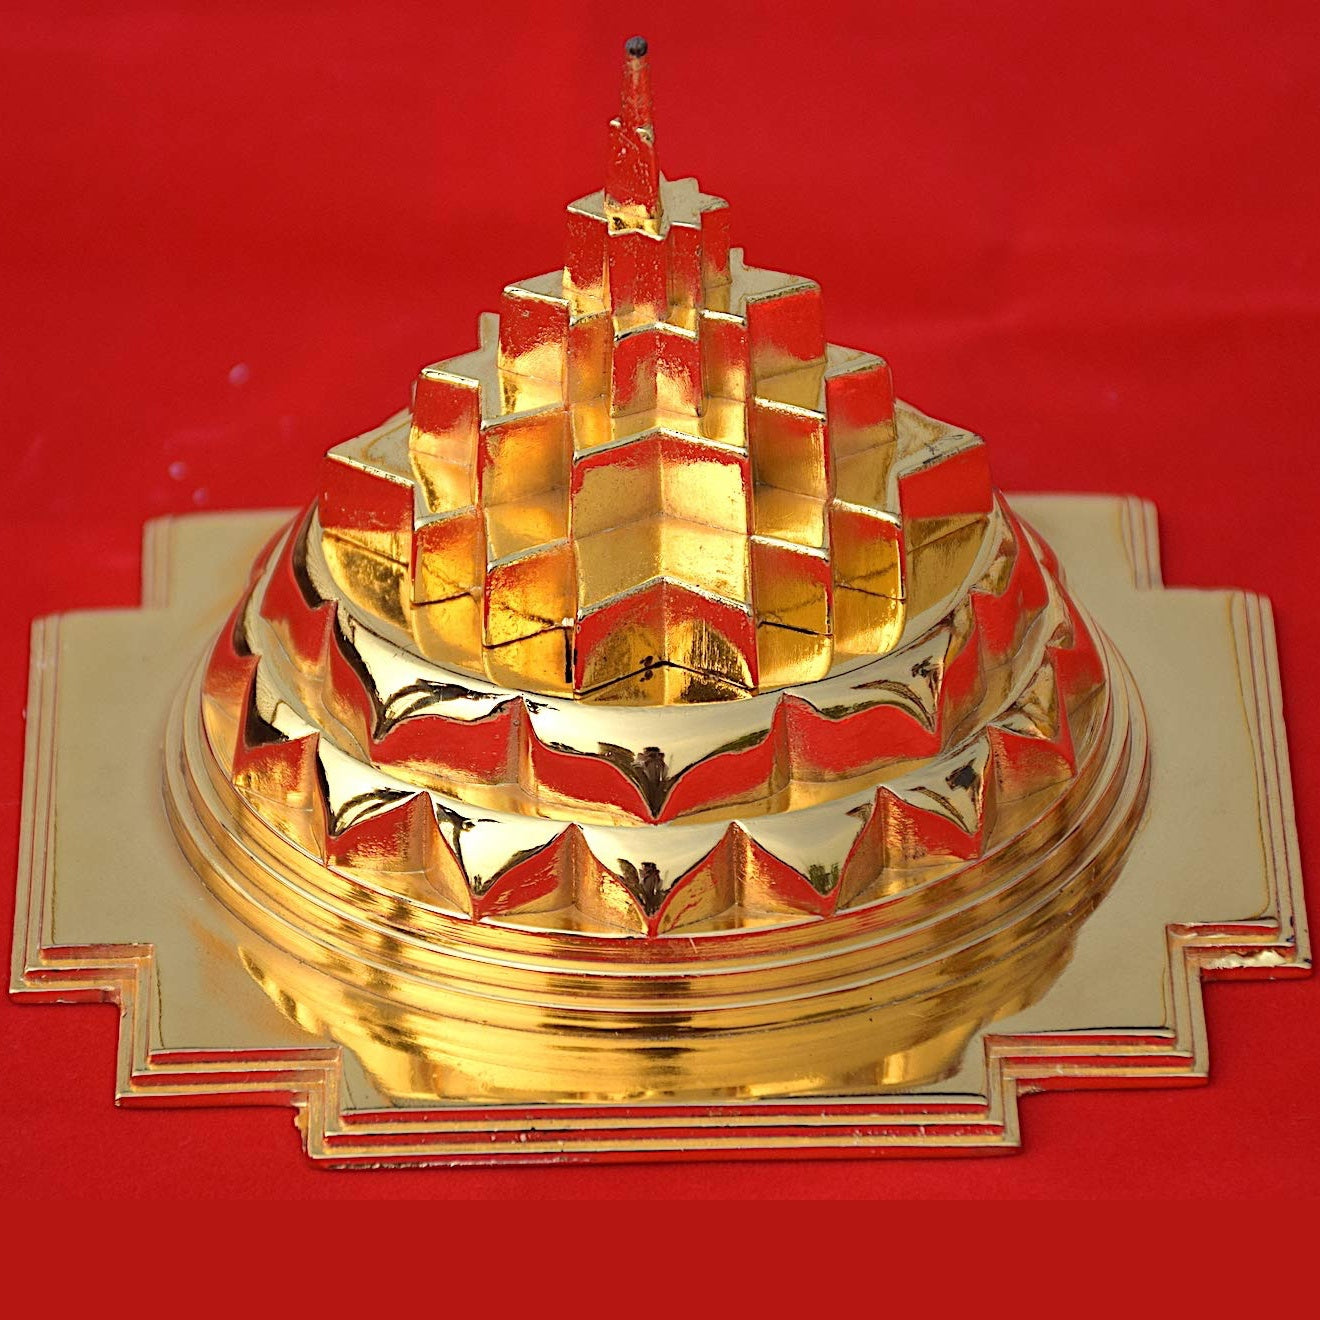 Gold Plated Maha Meru Shree Yantra